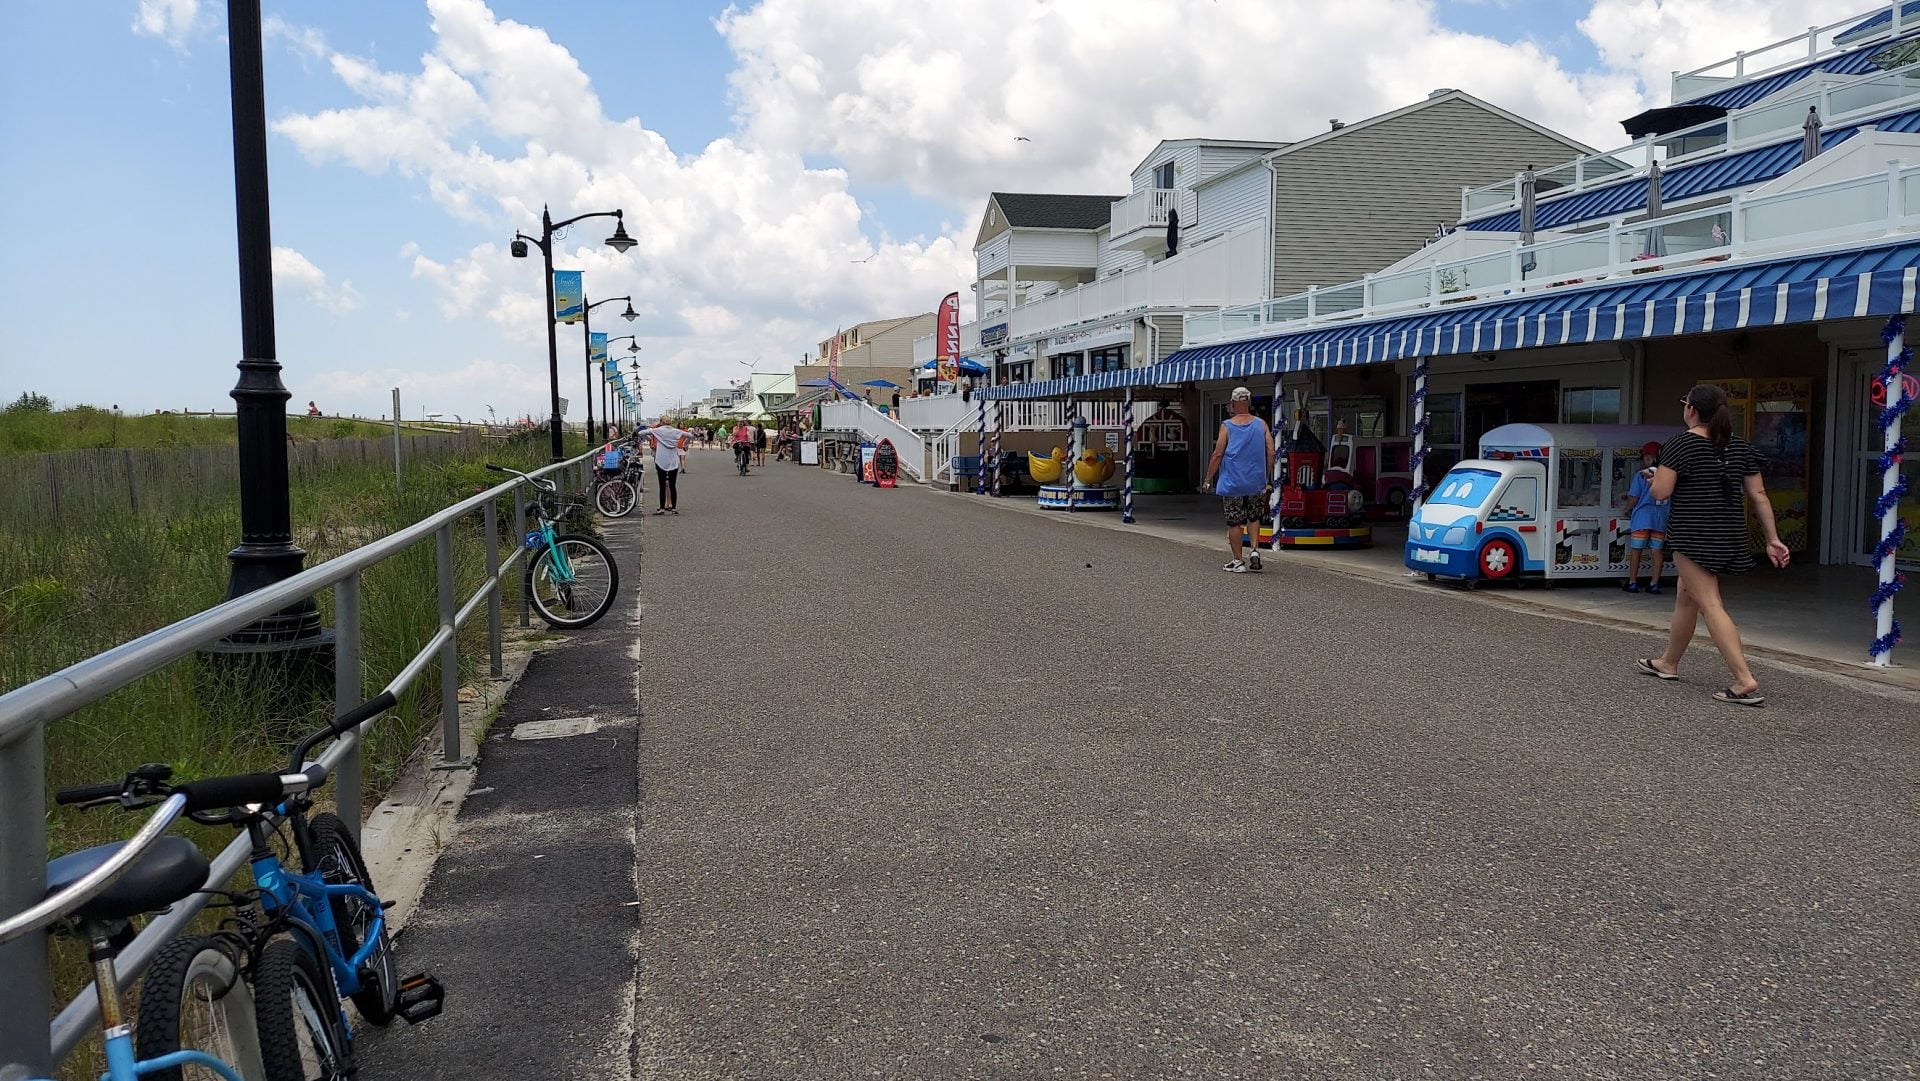 Sea Isle City Promenade